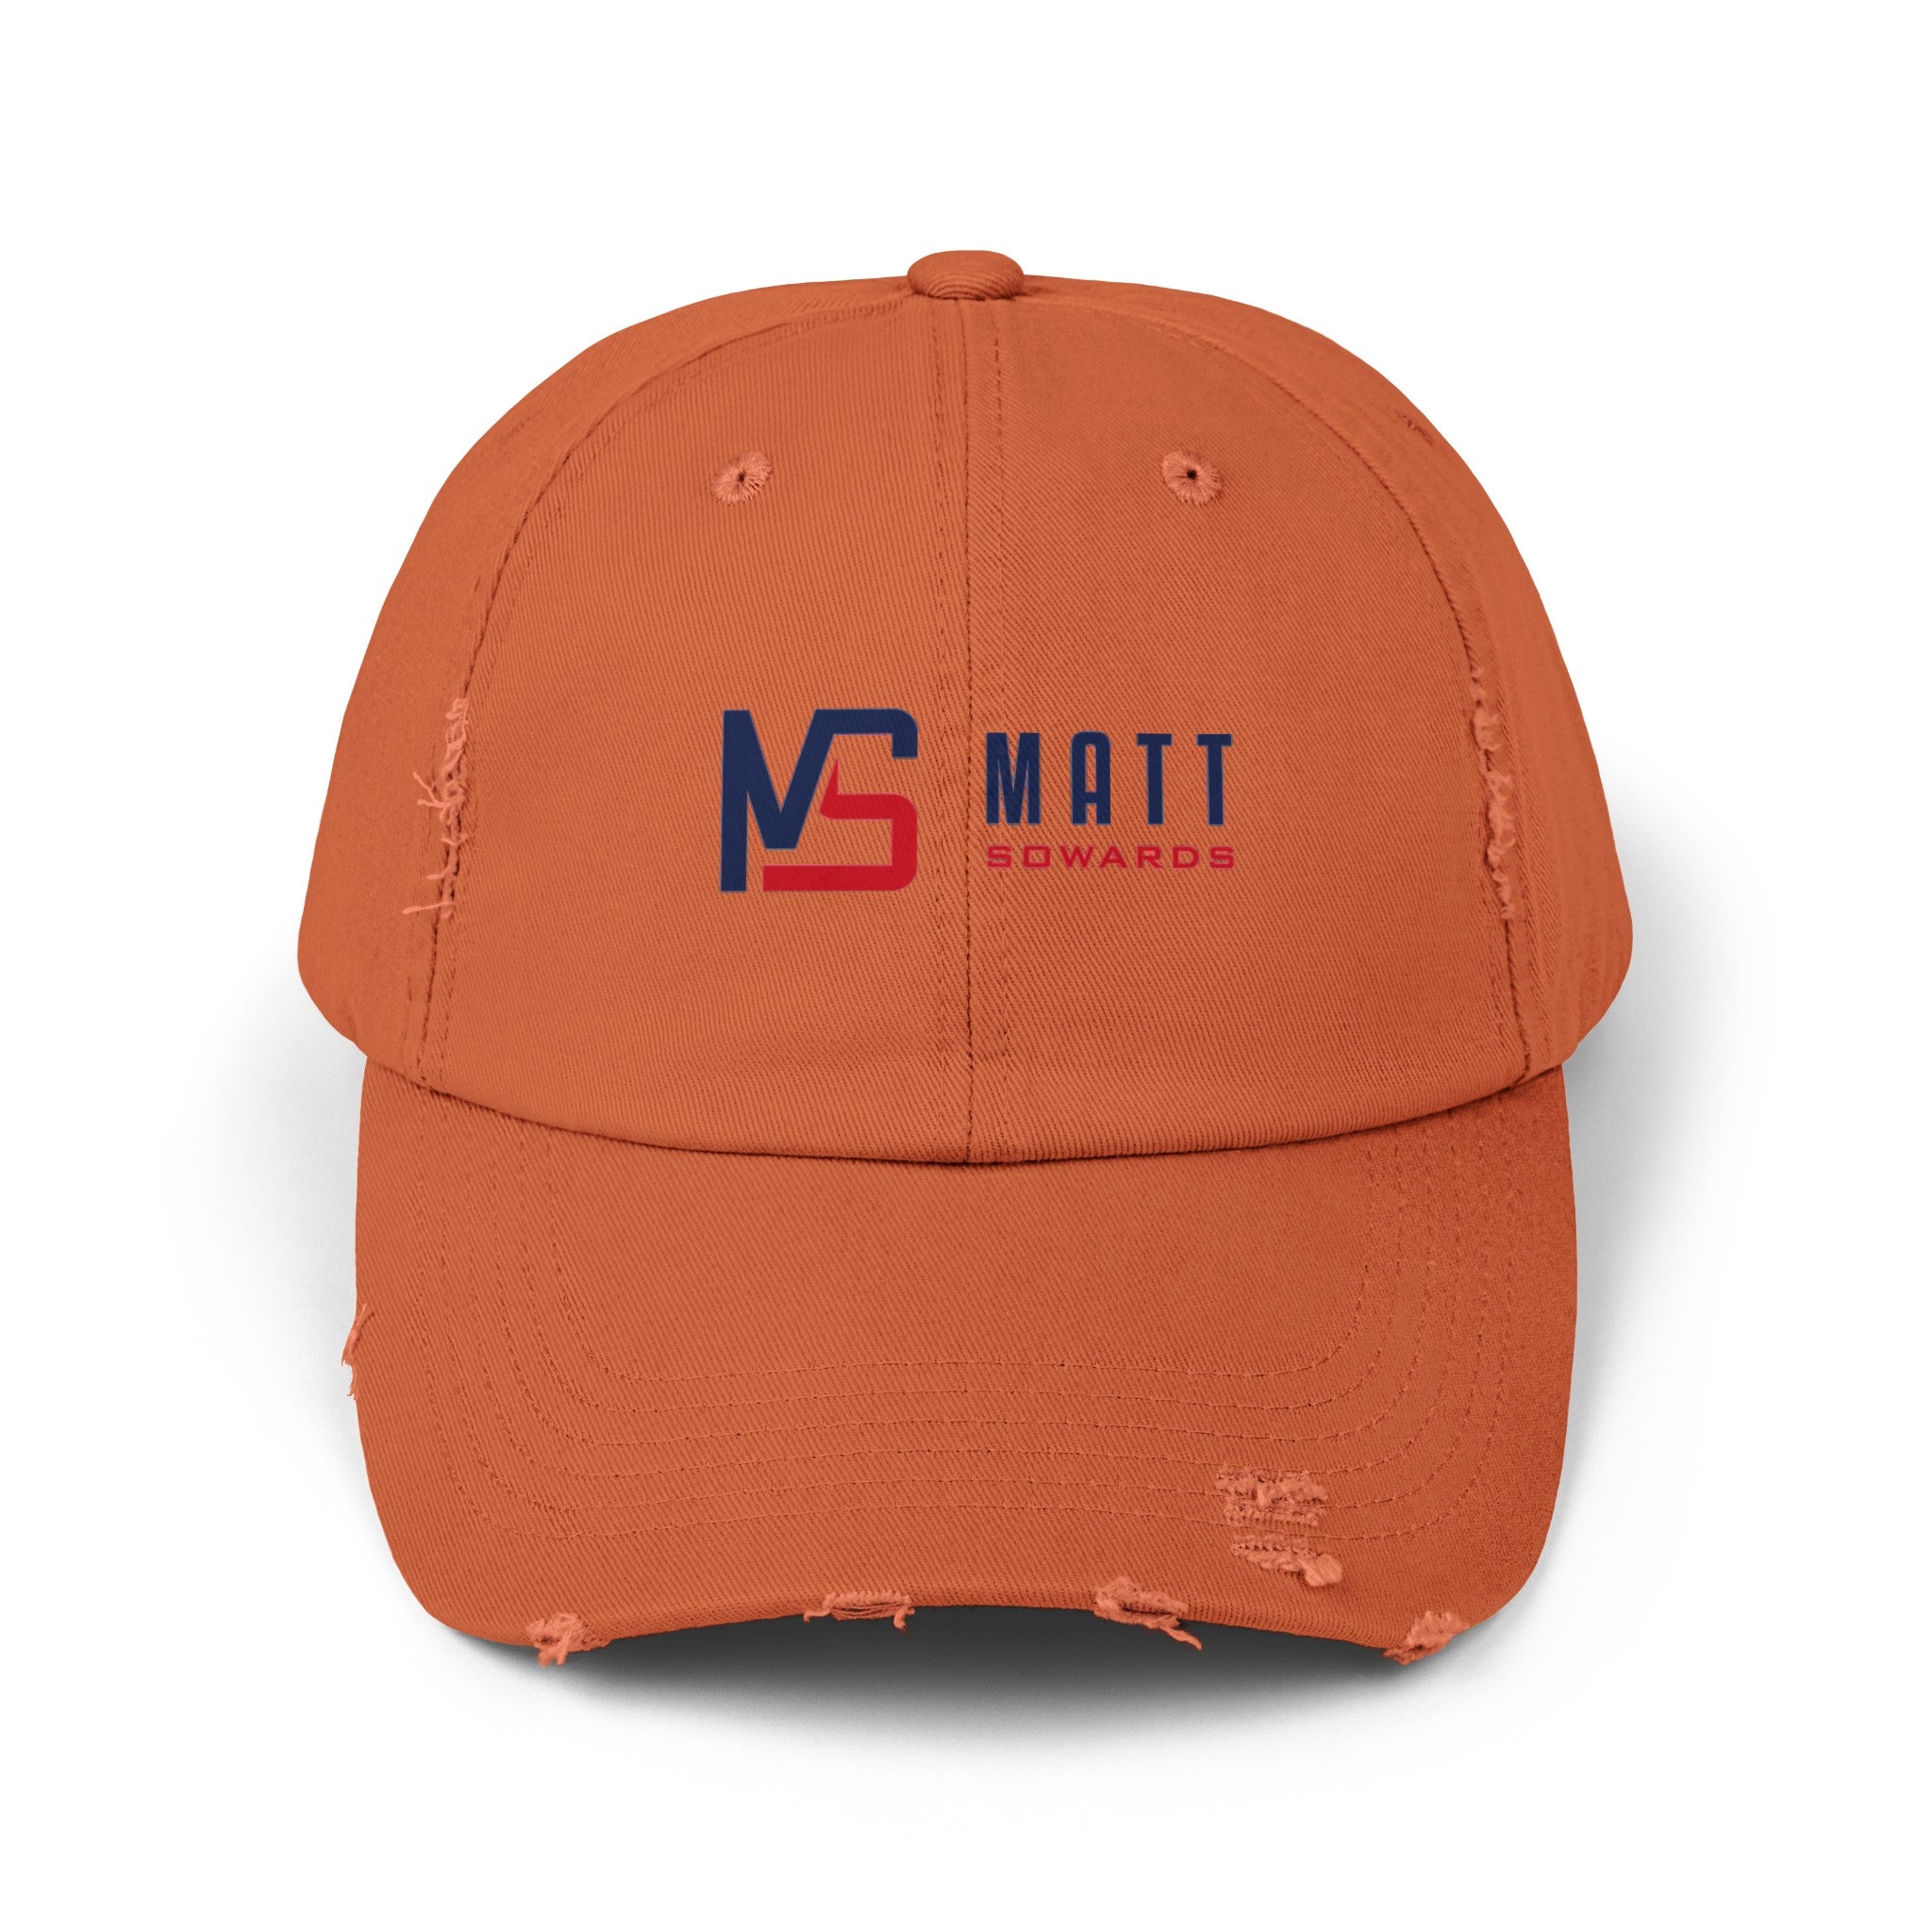 Matt Sowards Colored Distressed Hat - Matt Sowards Merch